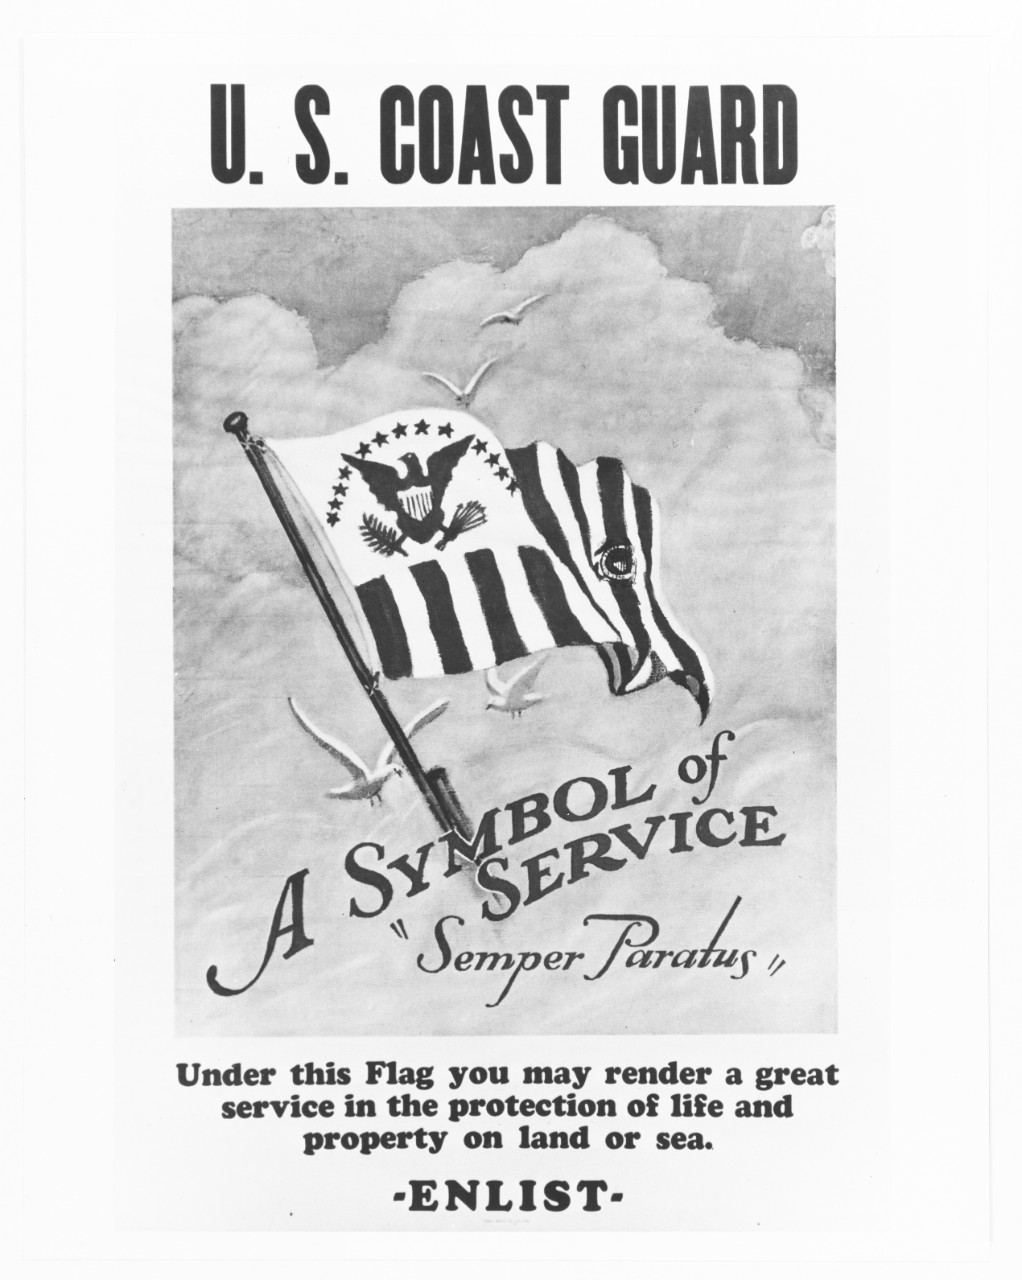 Coast Guard recruiting poster